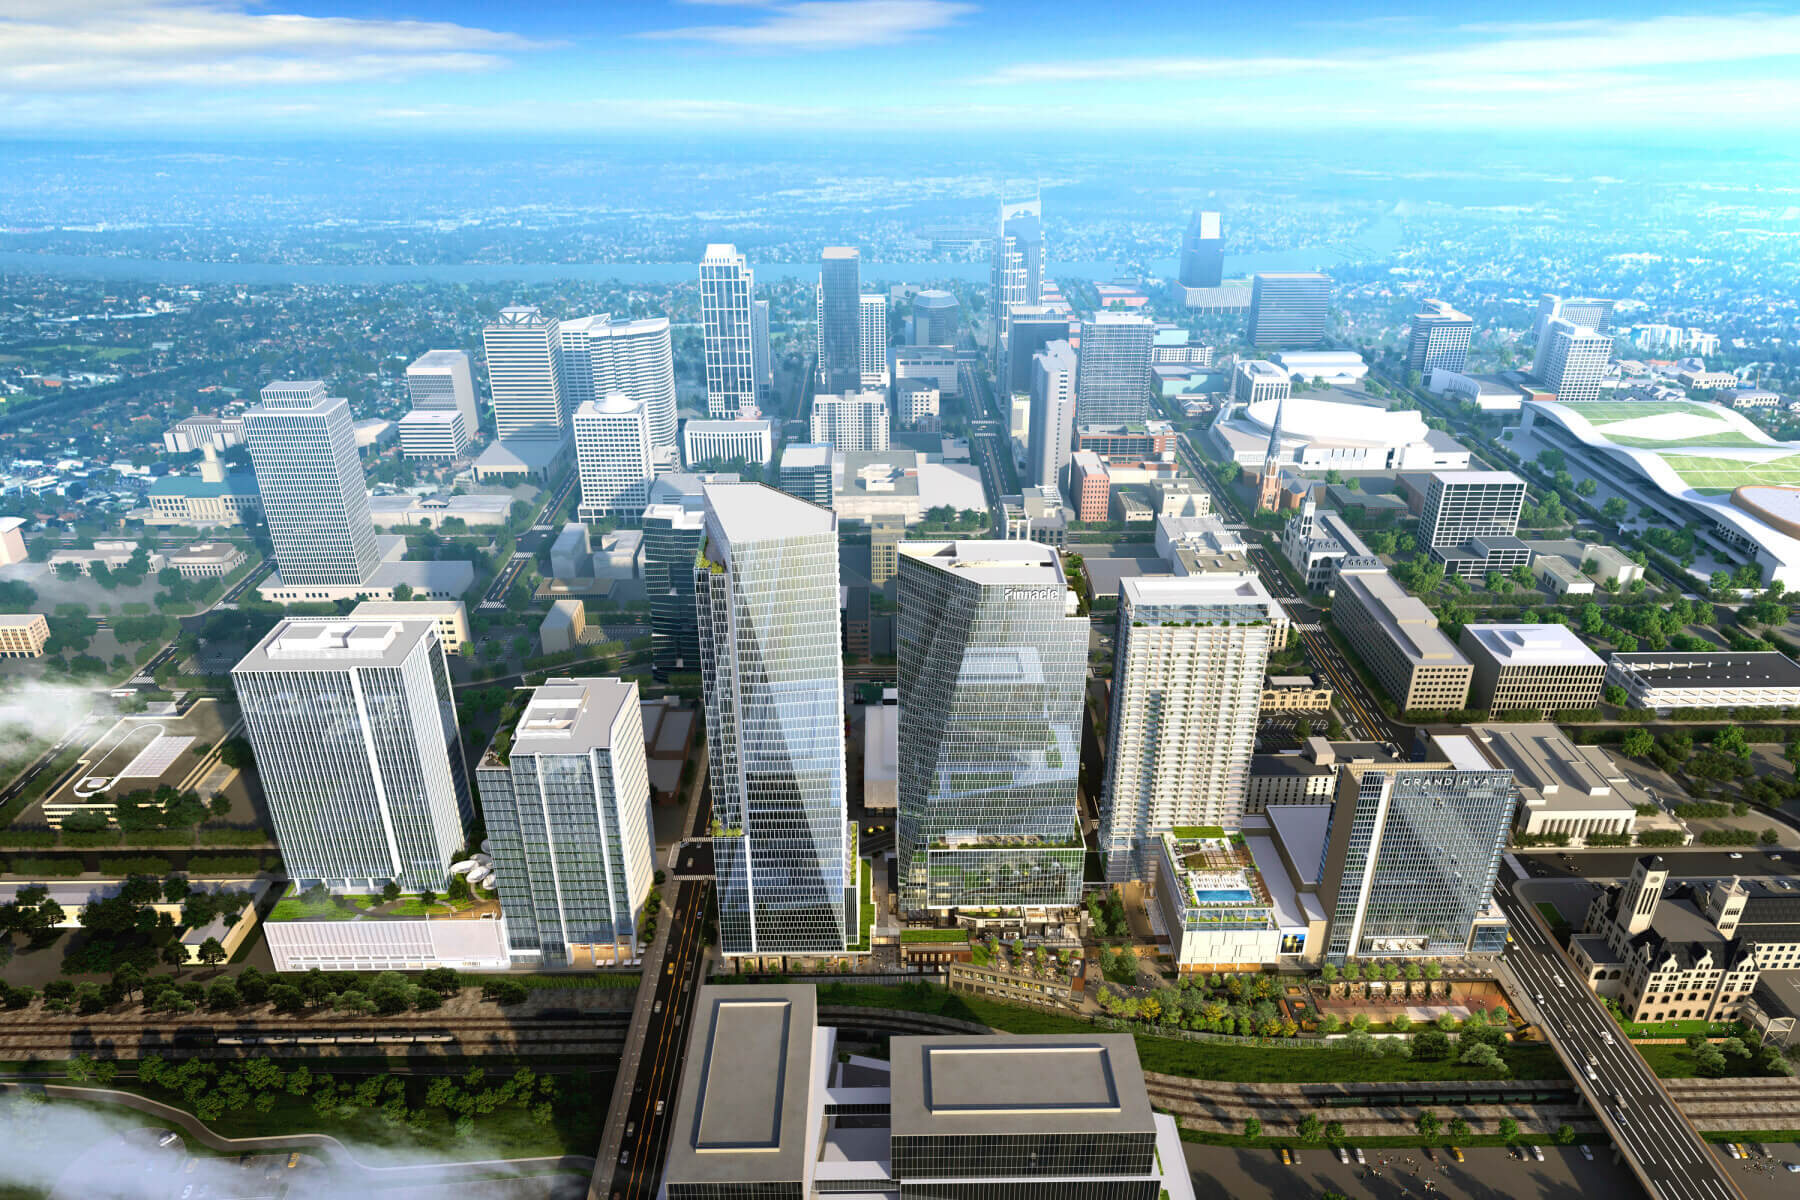 View of Nashville Yards campus rendering